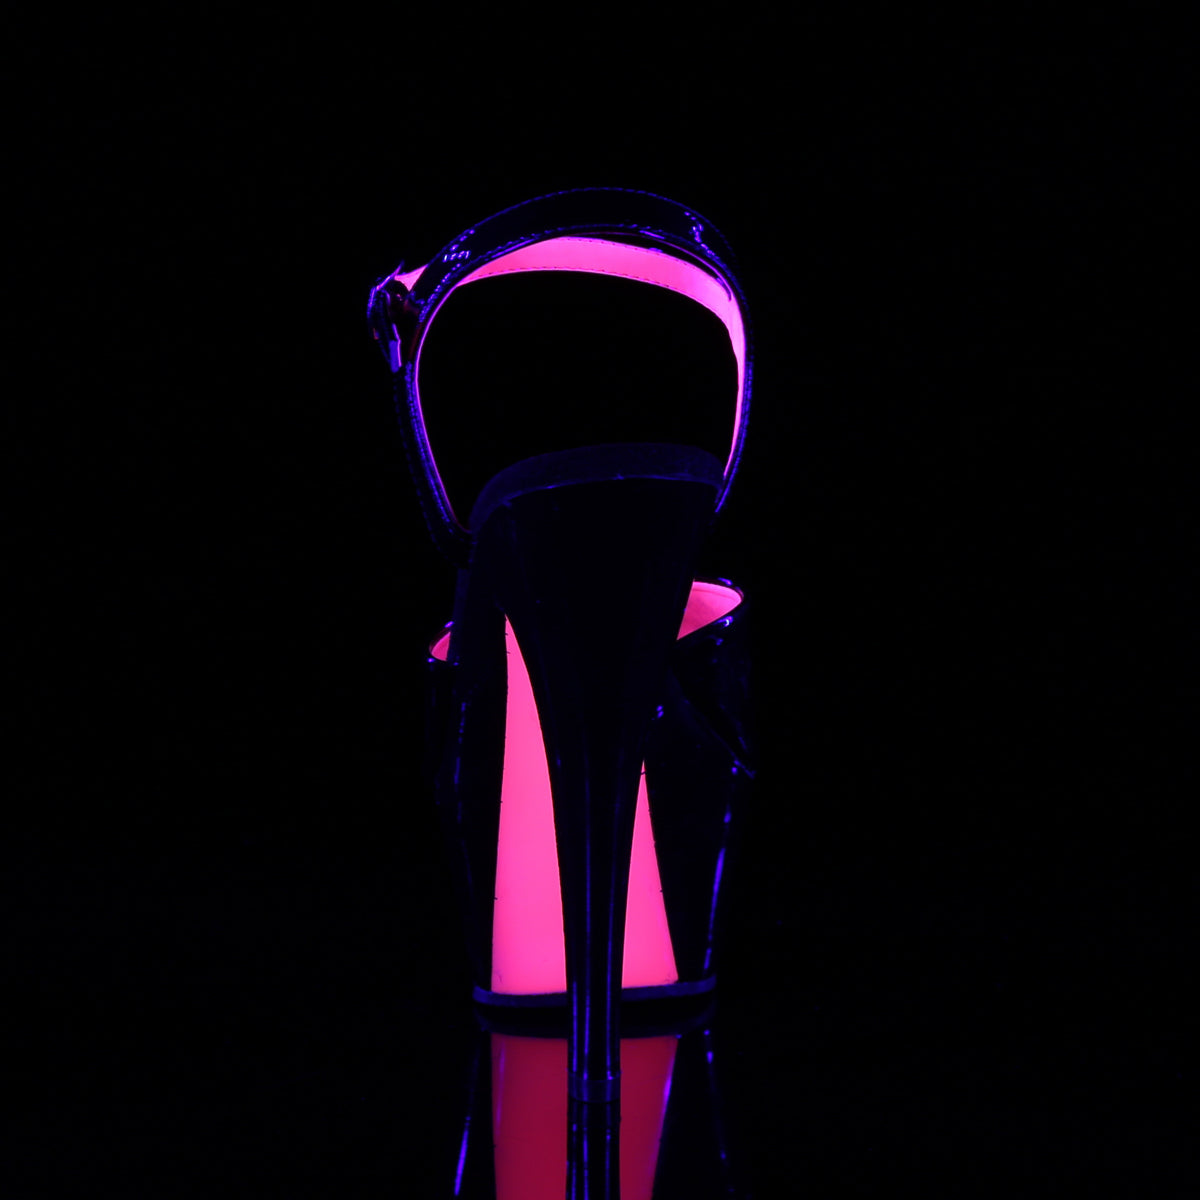 KISS-209TT Black Patent-Neon Hot Pink Platform Sandal Pleaser